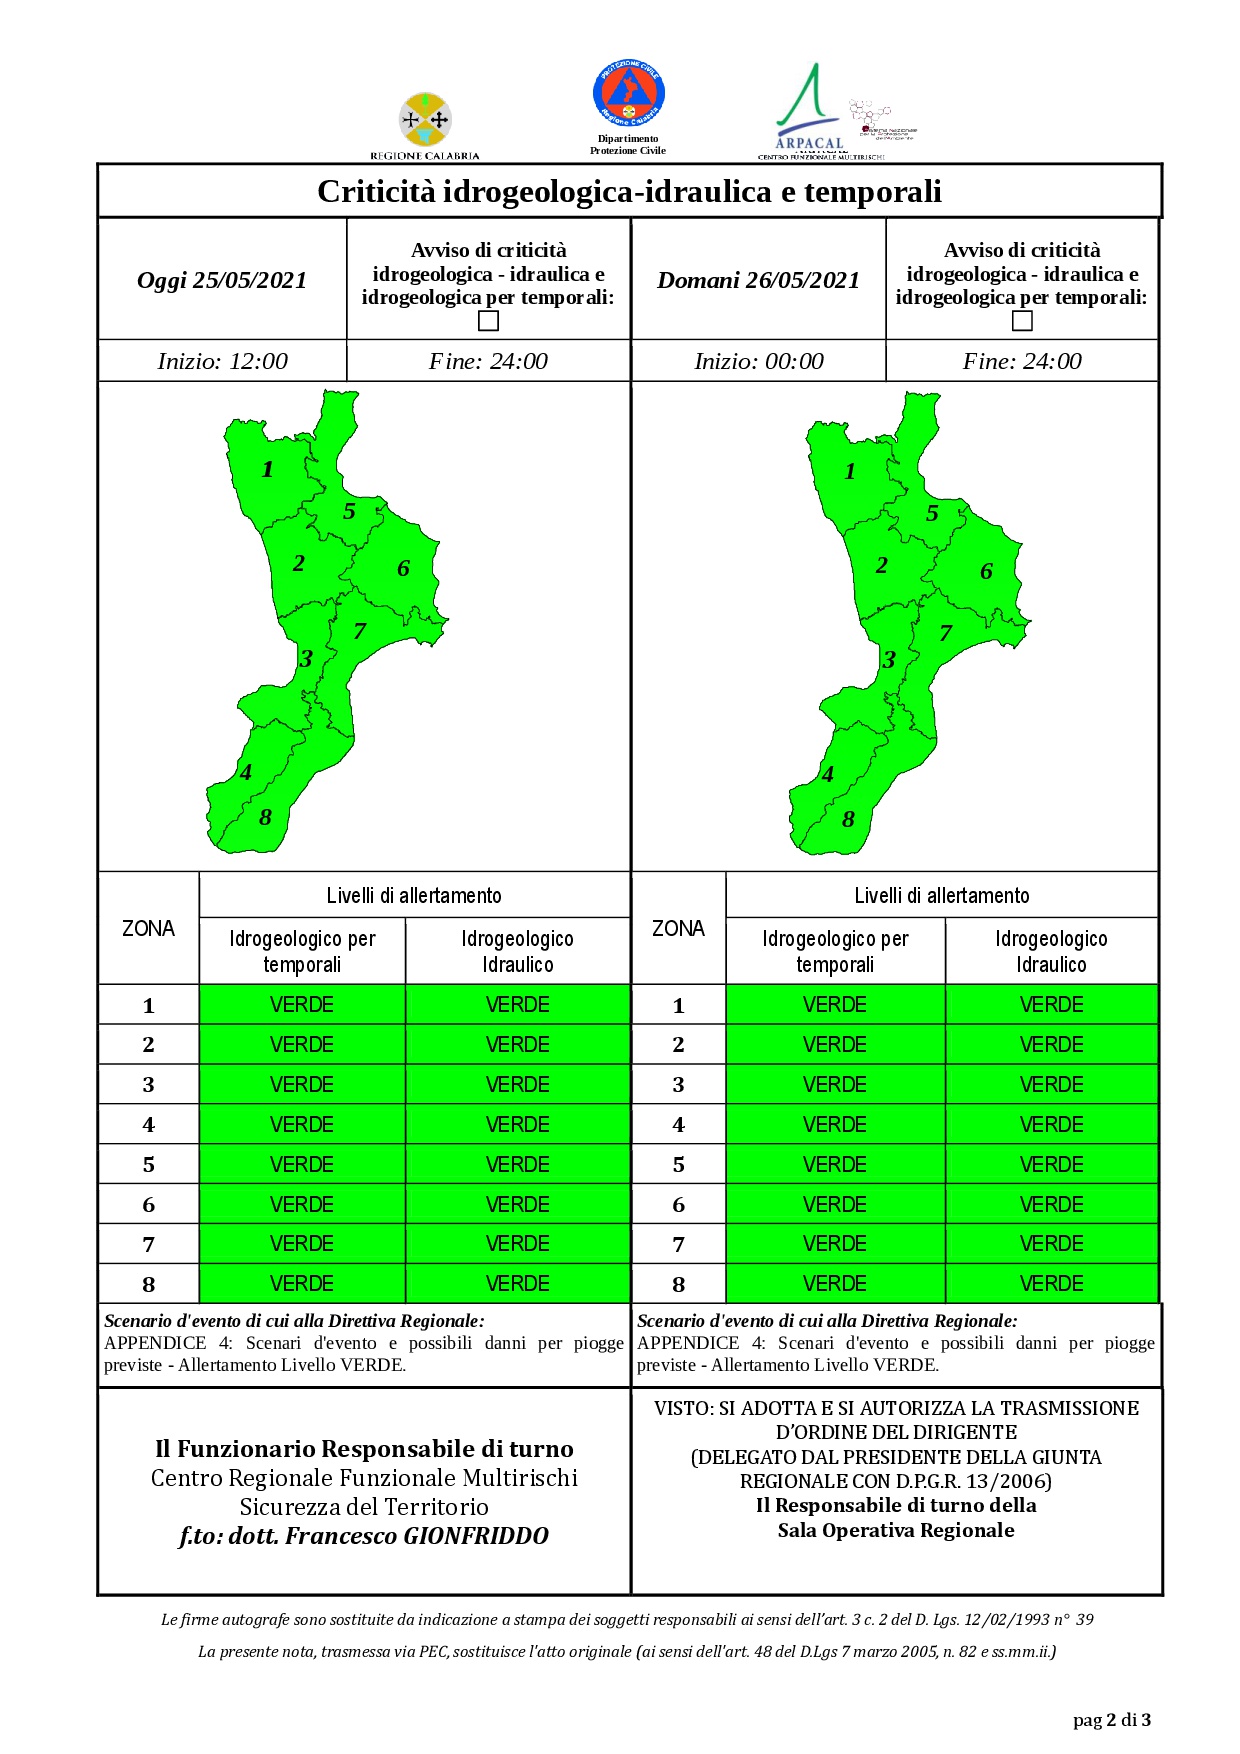 Criticità idrogeologica-idraulica e temporali in Calabria 25-05-2021